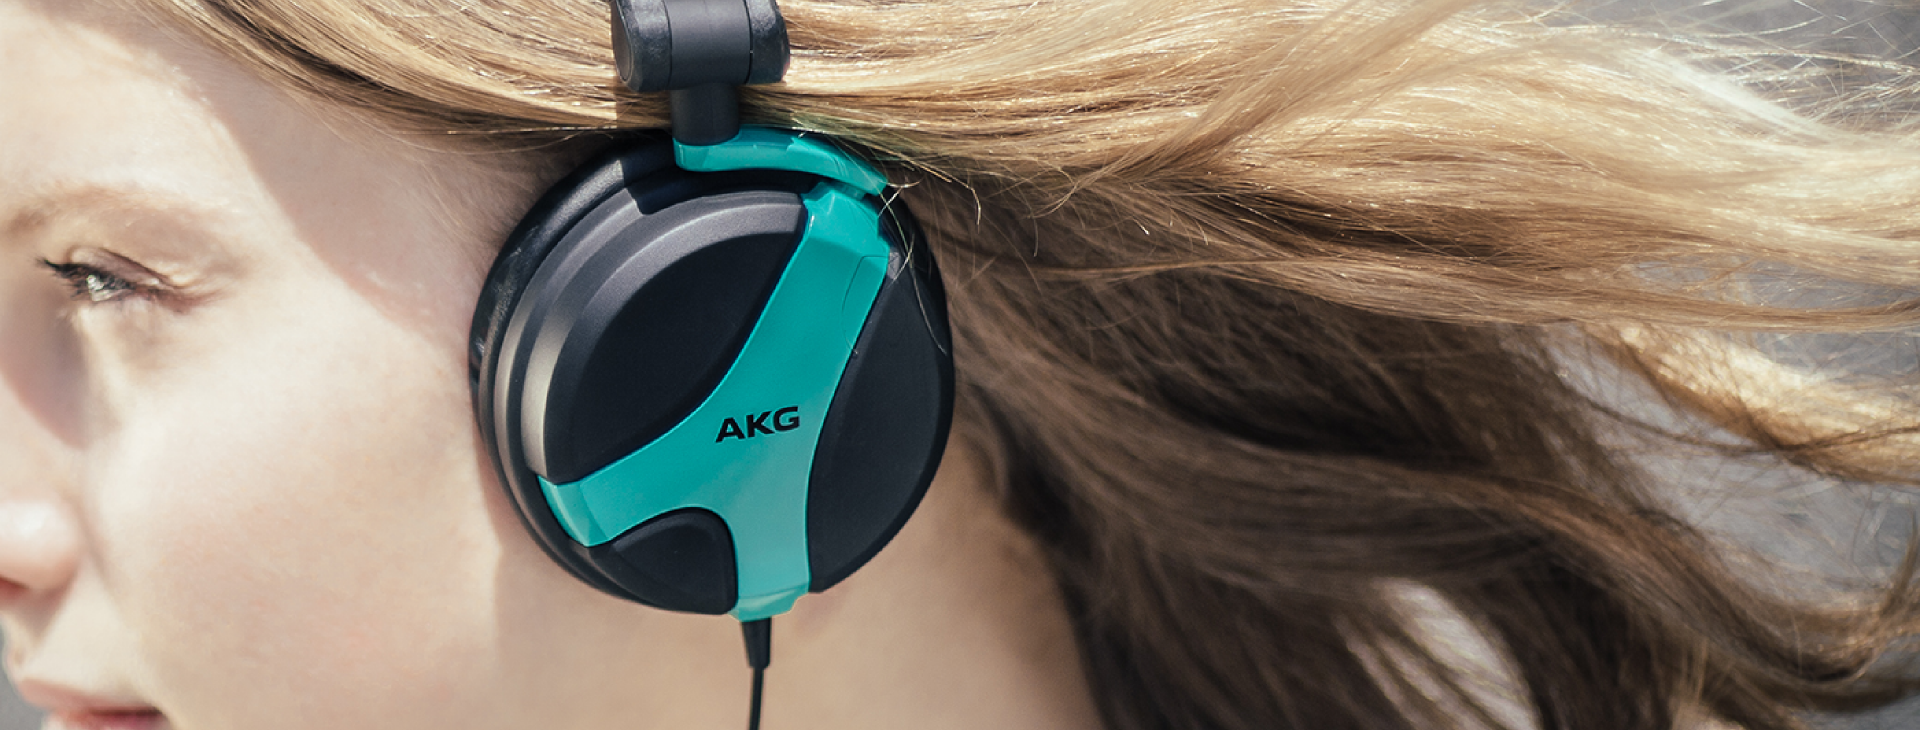 Product design for headphones: K81, AKG Acoustics | PESCHKE